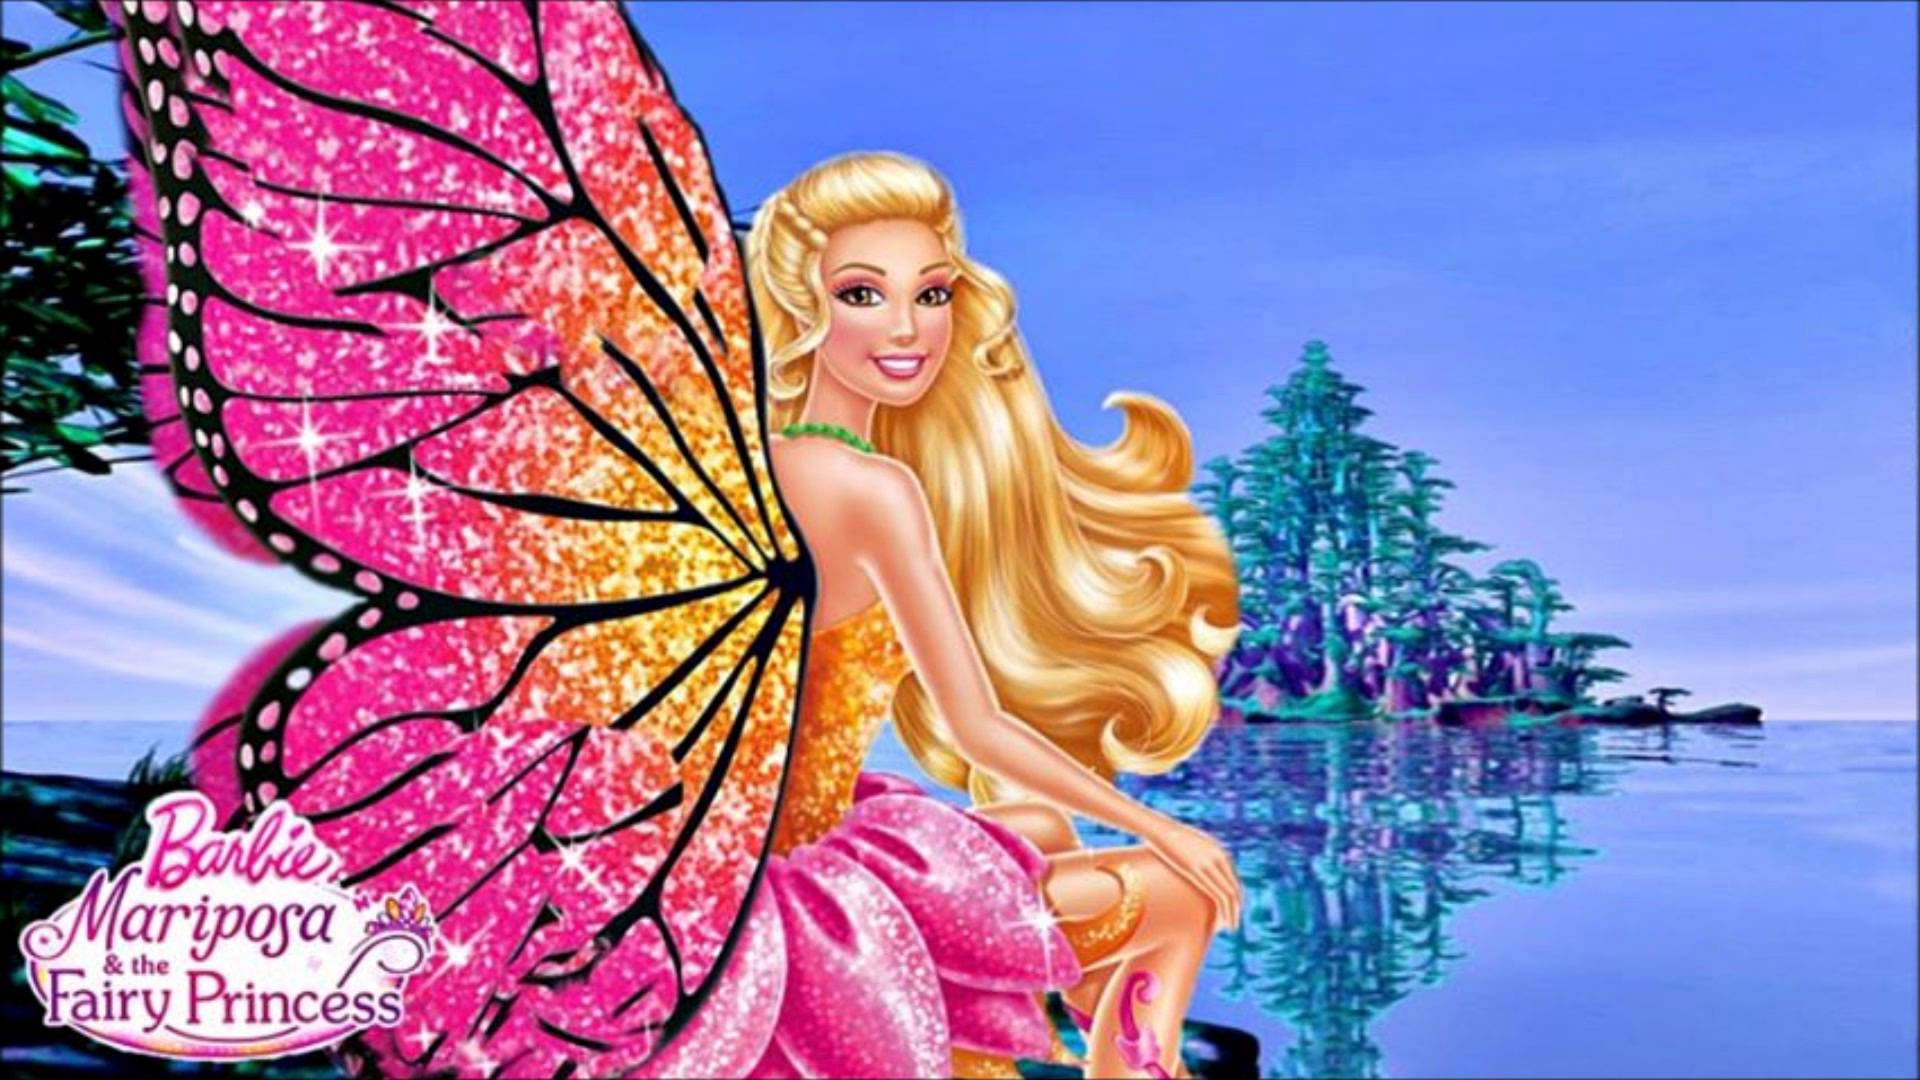 Barbie Mariposa - Barbie Movies Wallpaper (31962501) - Fanpop